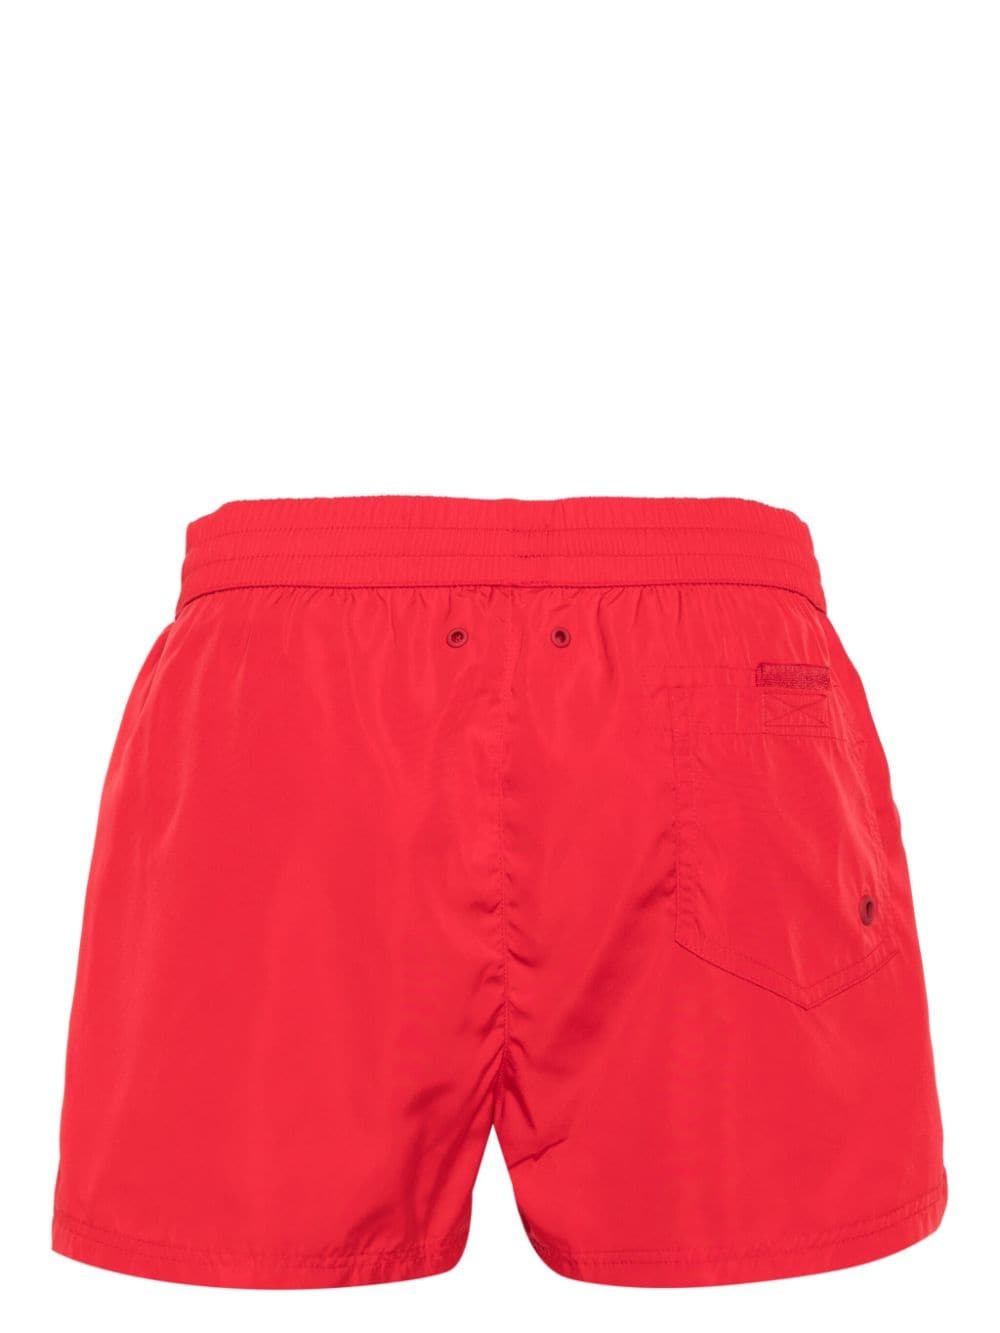 Bmbx-Mario swim shorts - 2